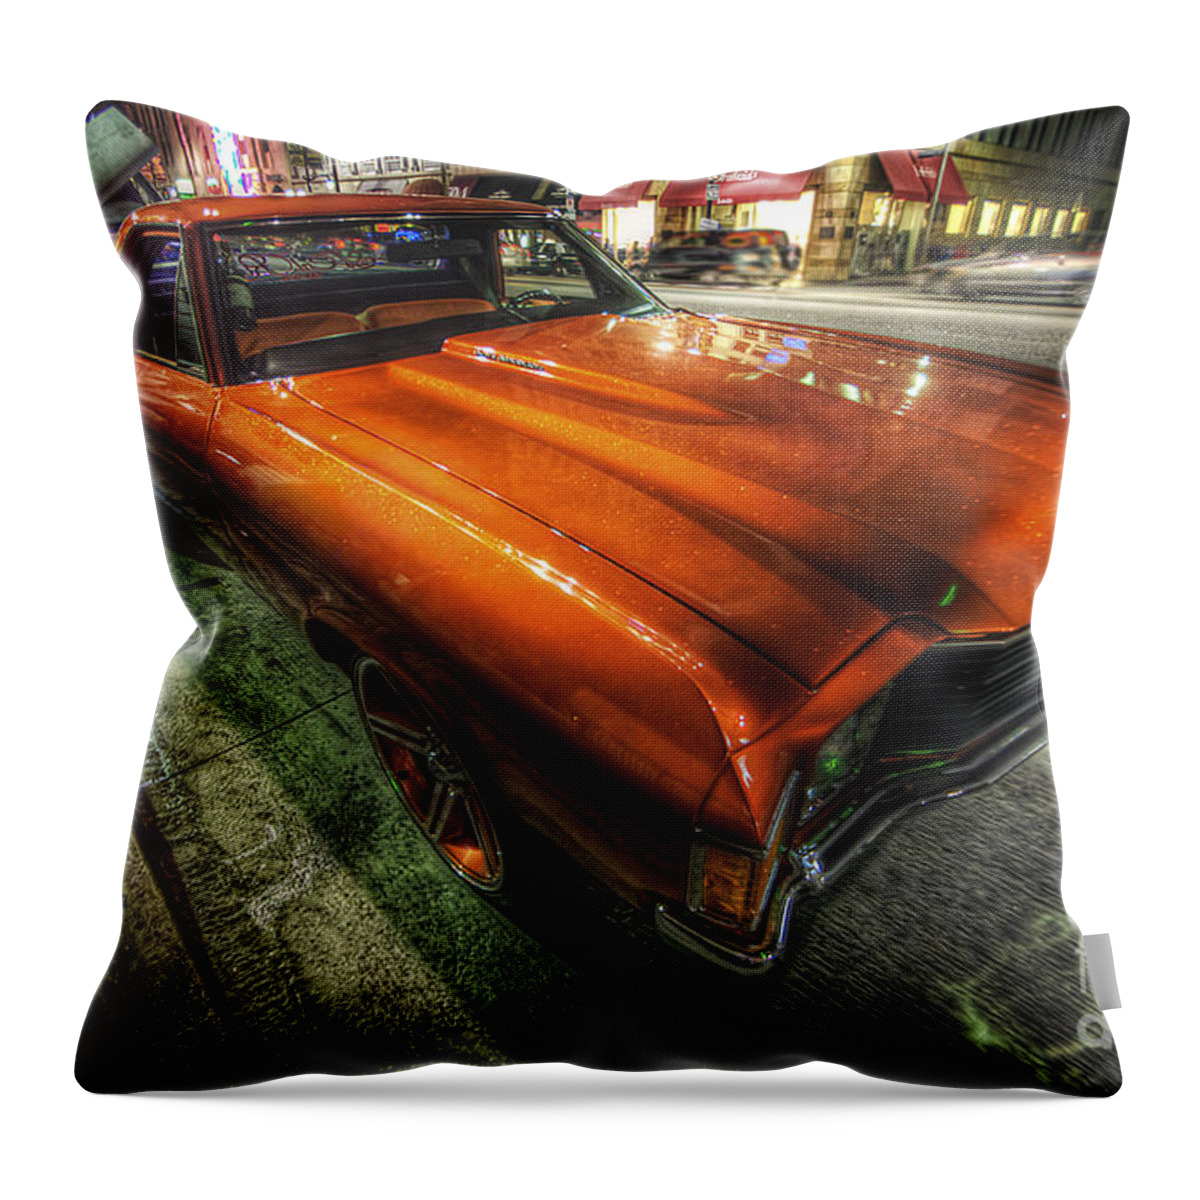 Yhun Suarez Throw Pillow featuring the photograph Chevy Impala by Yhun Suarez